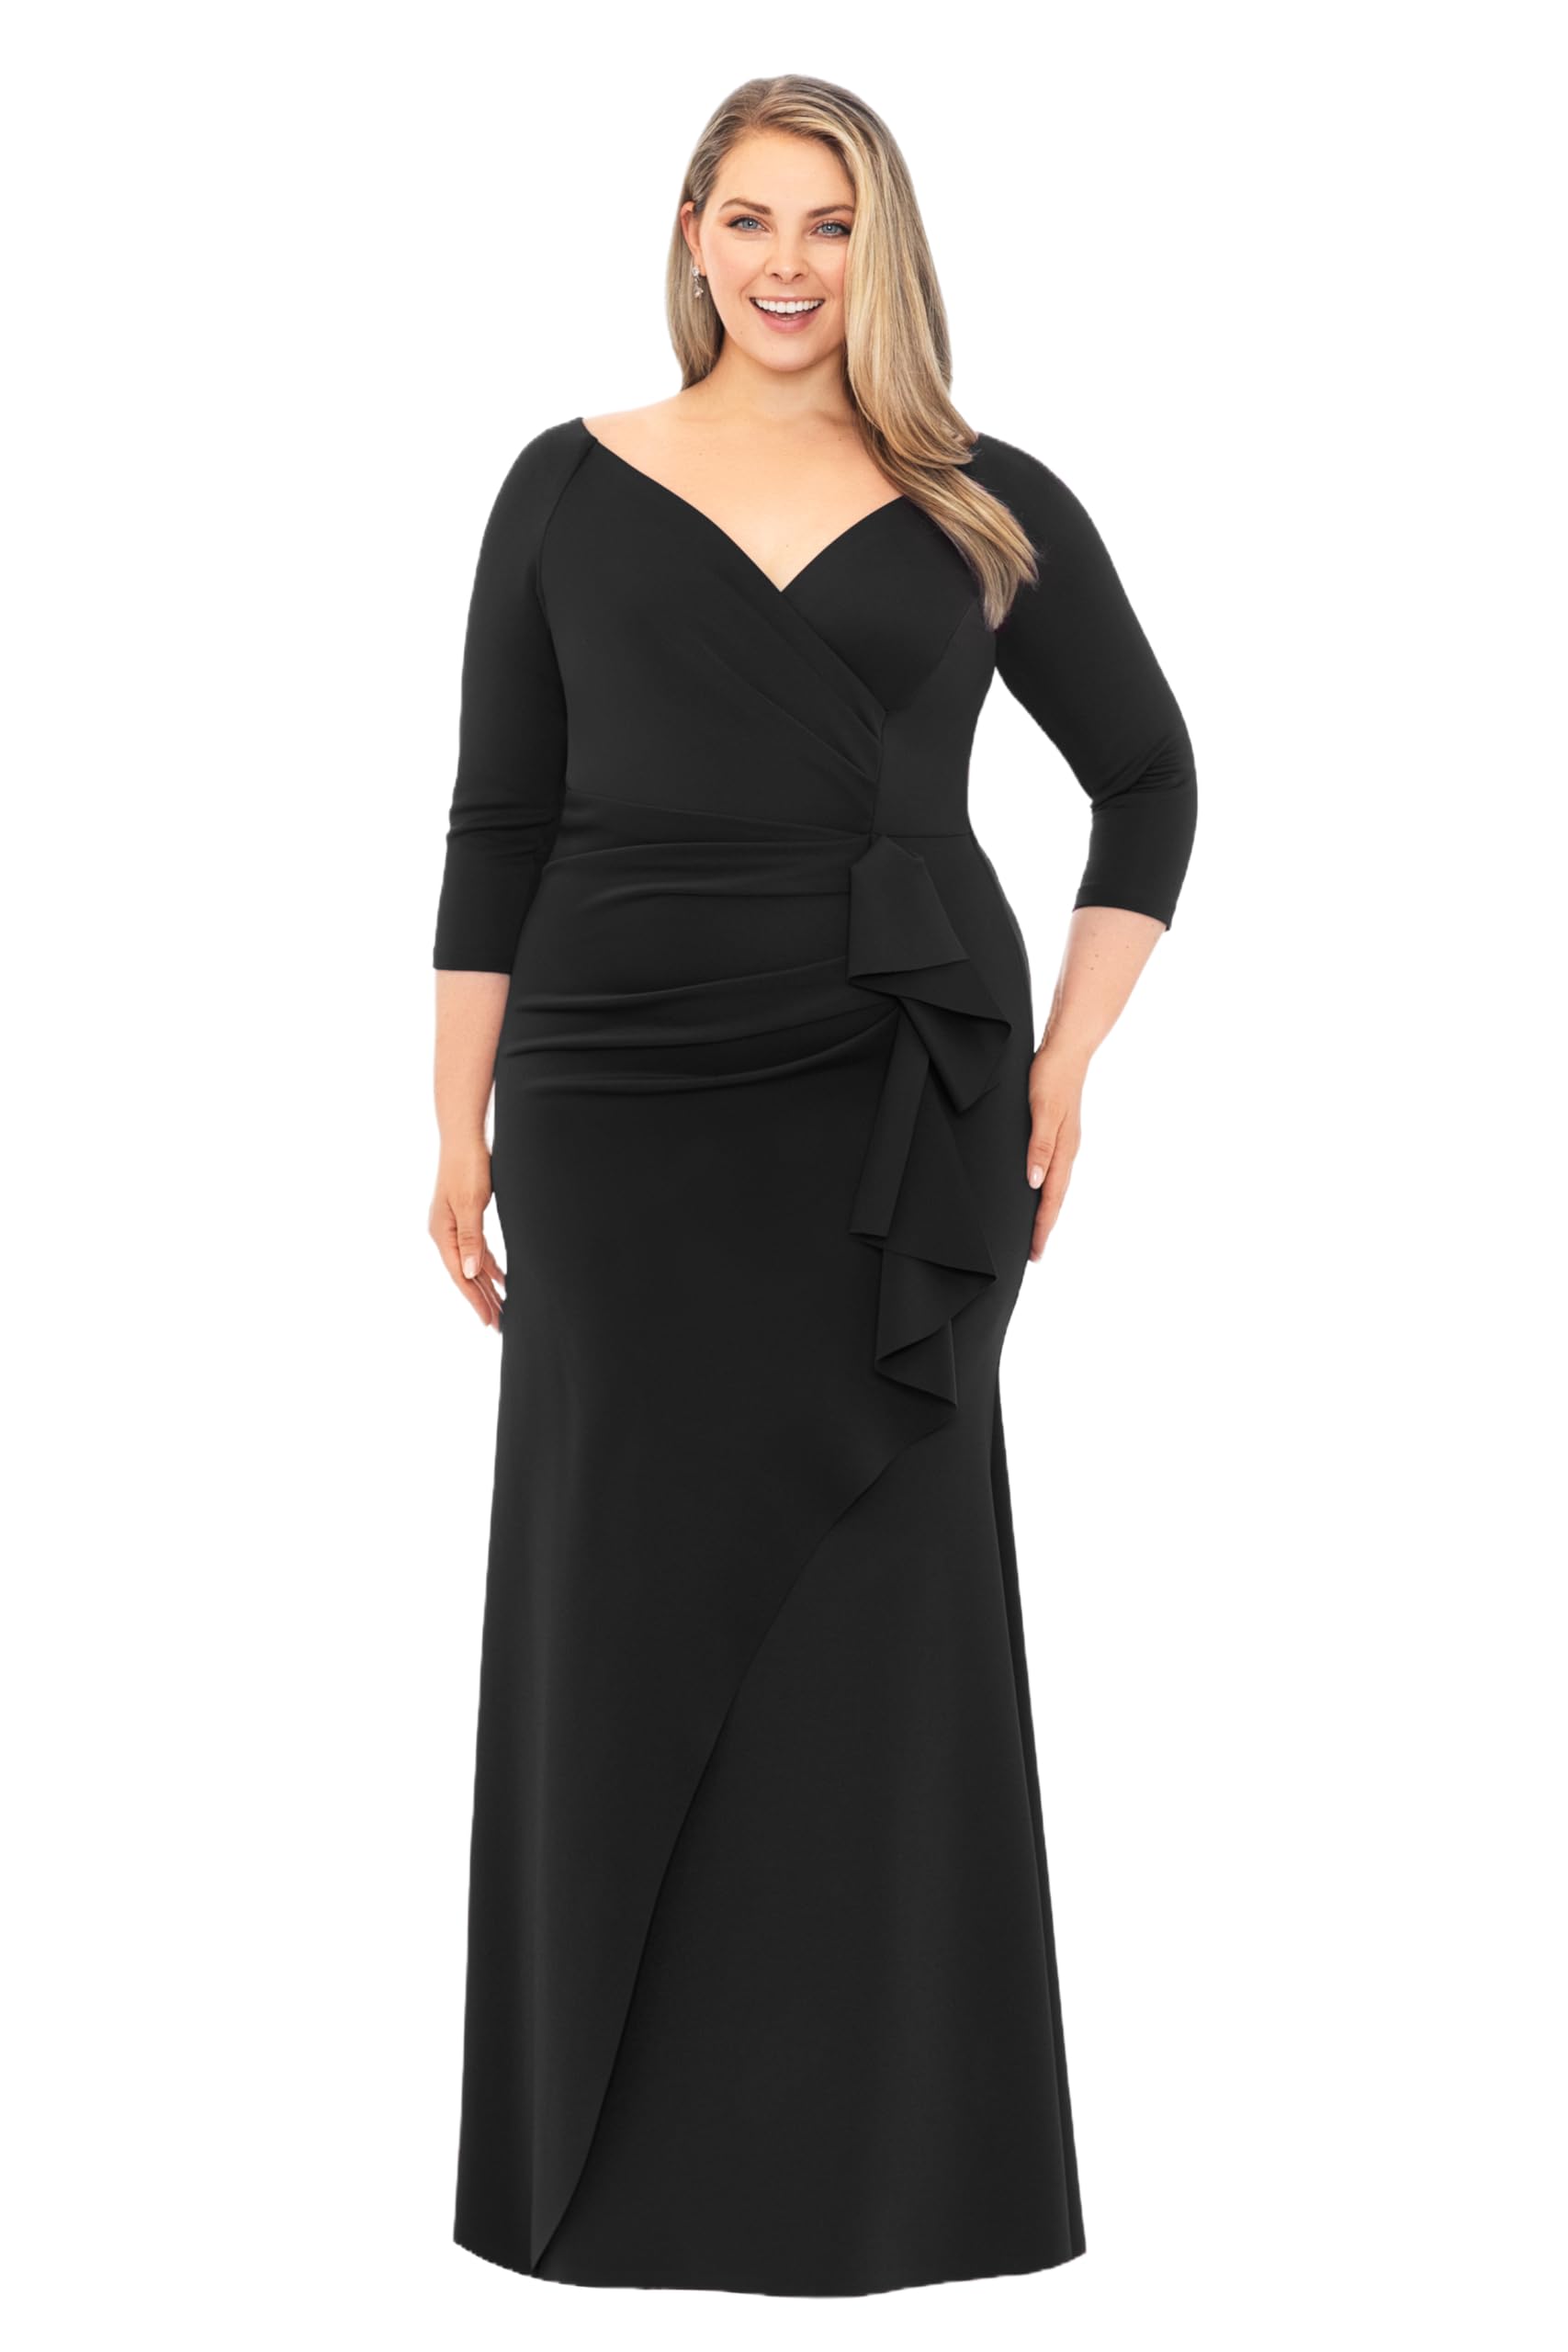 Xscape Women's Plus Size Long 3/4 Sleeve V-Neck Side Ruched Dress